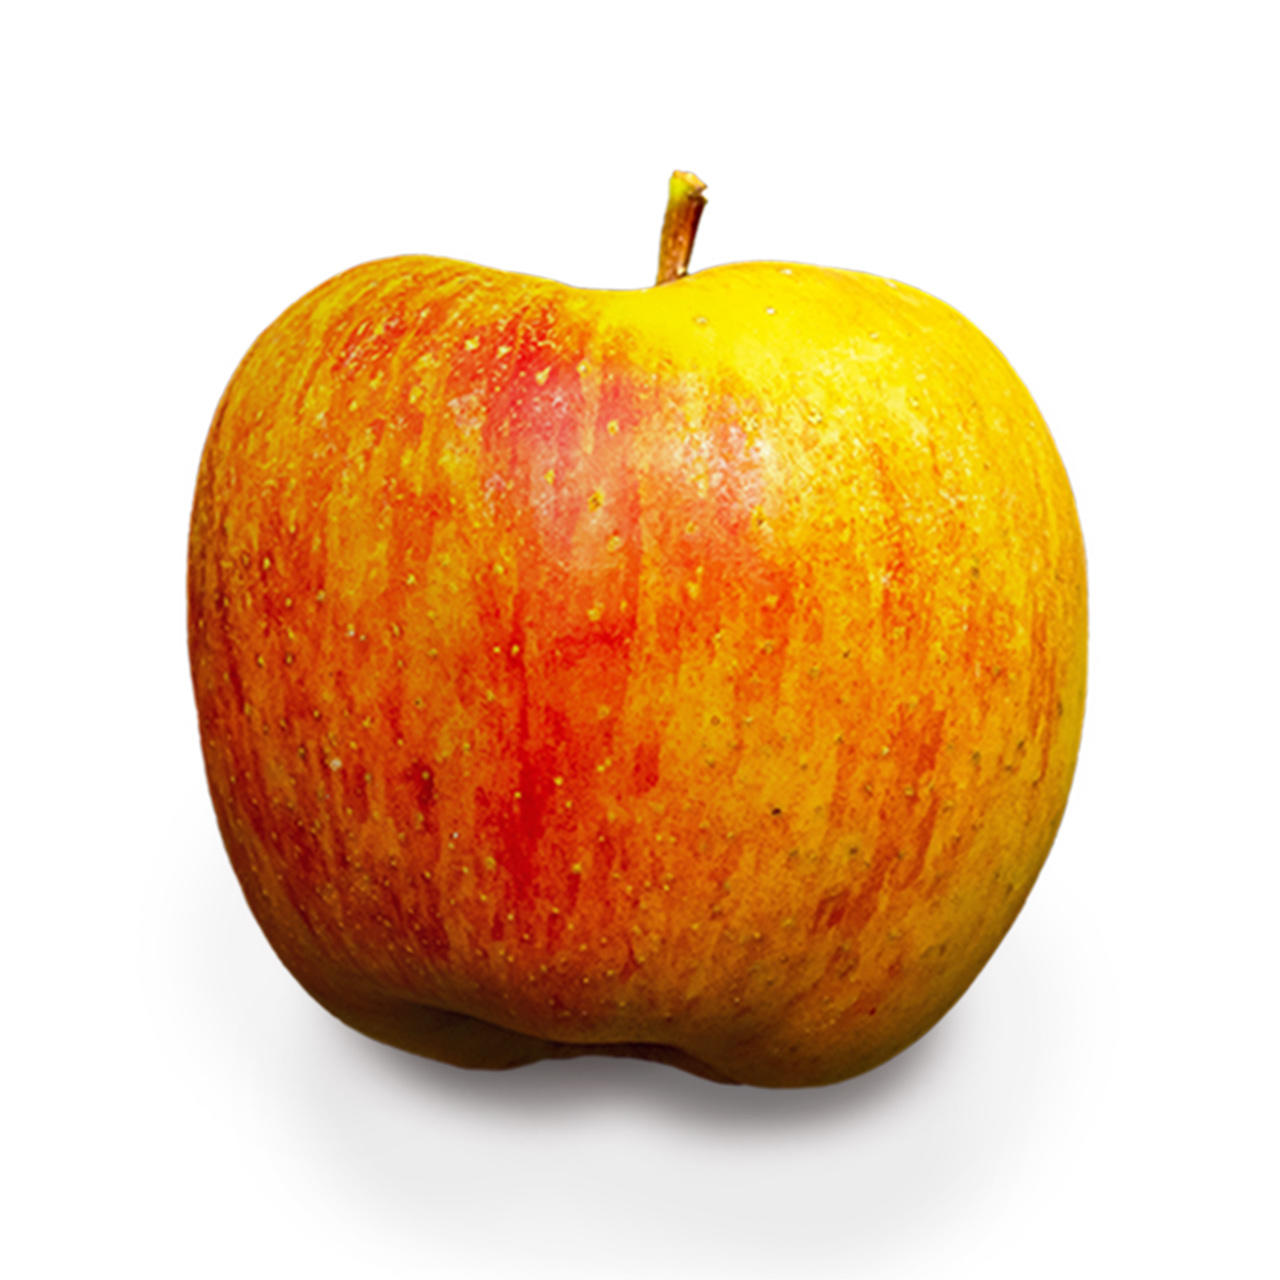 Zari-æble. Populært æble i de danske supermarkeder